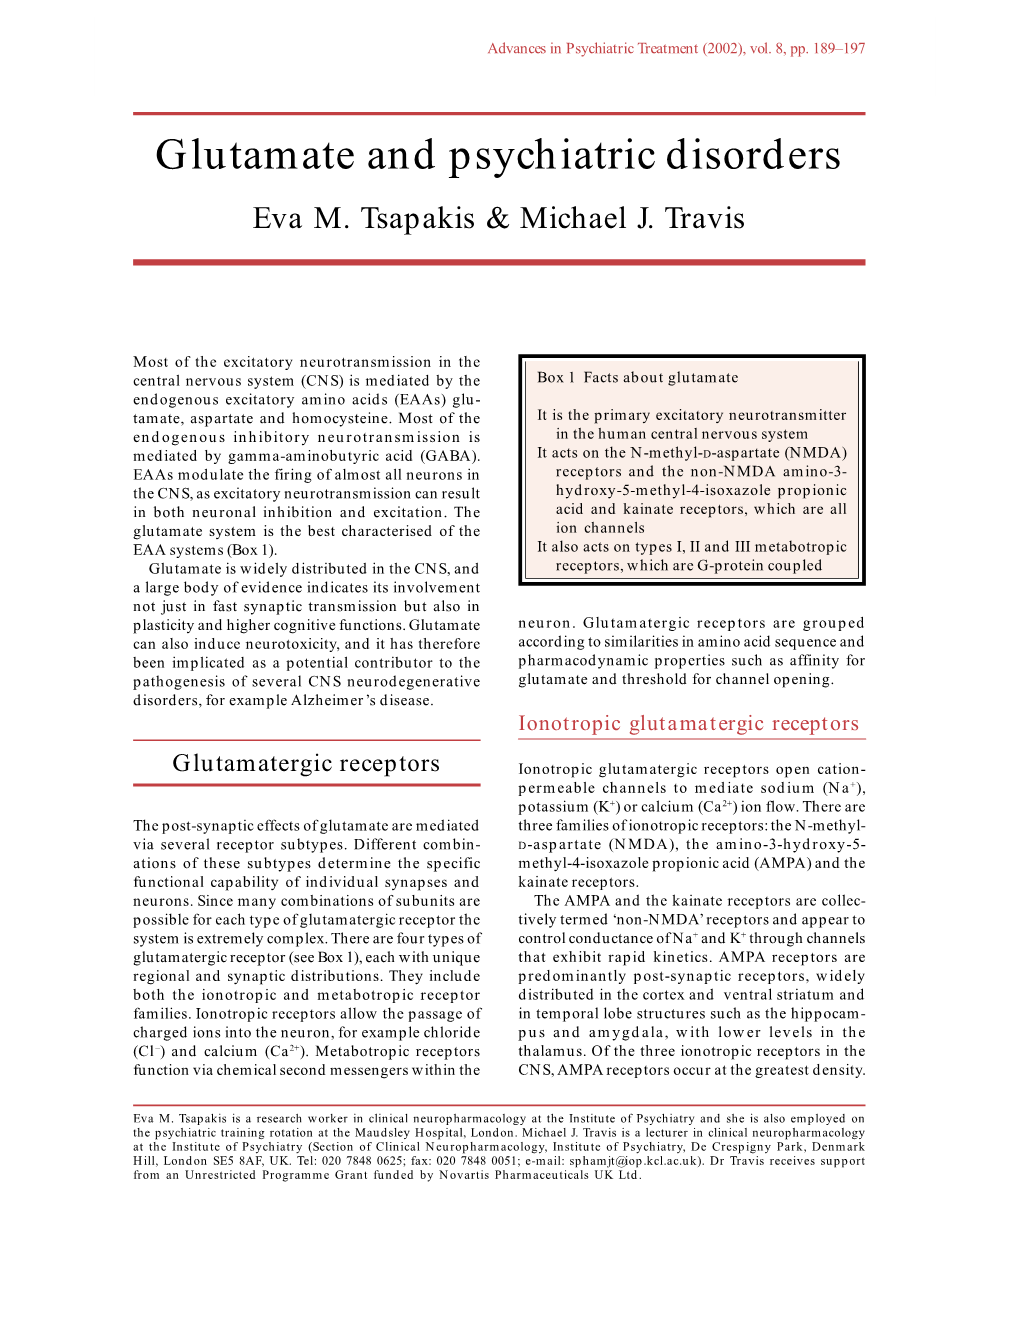 Glutamate and Psychiatric Disordersadvances in Psychiatricapt (2002), Treatment Vol